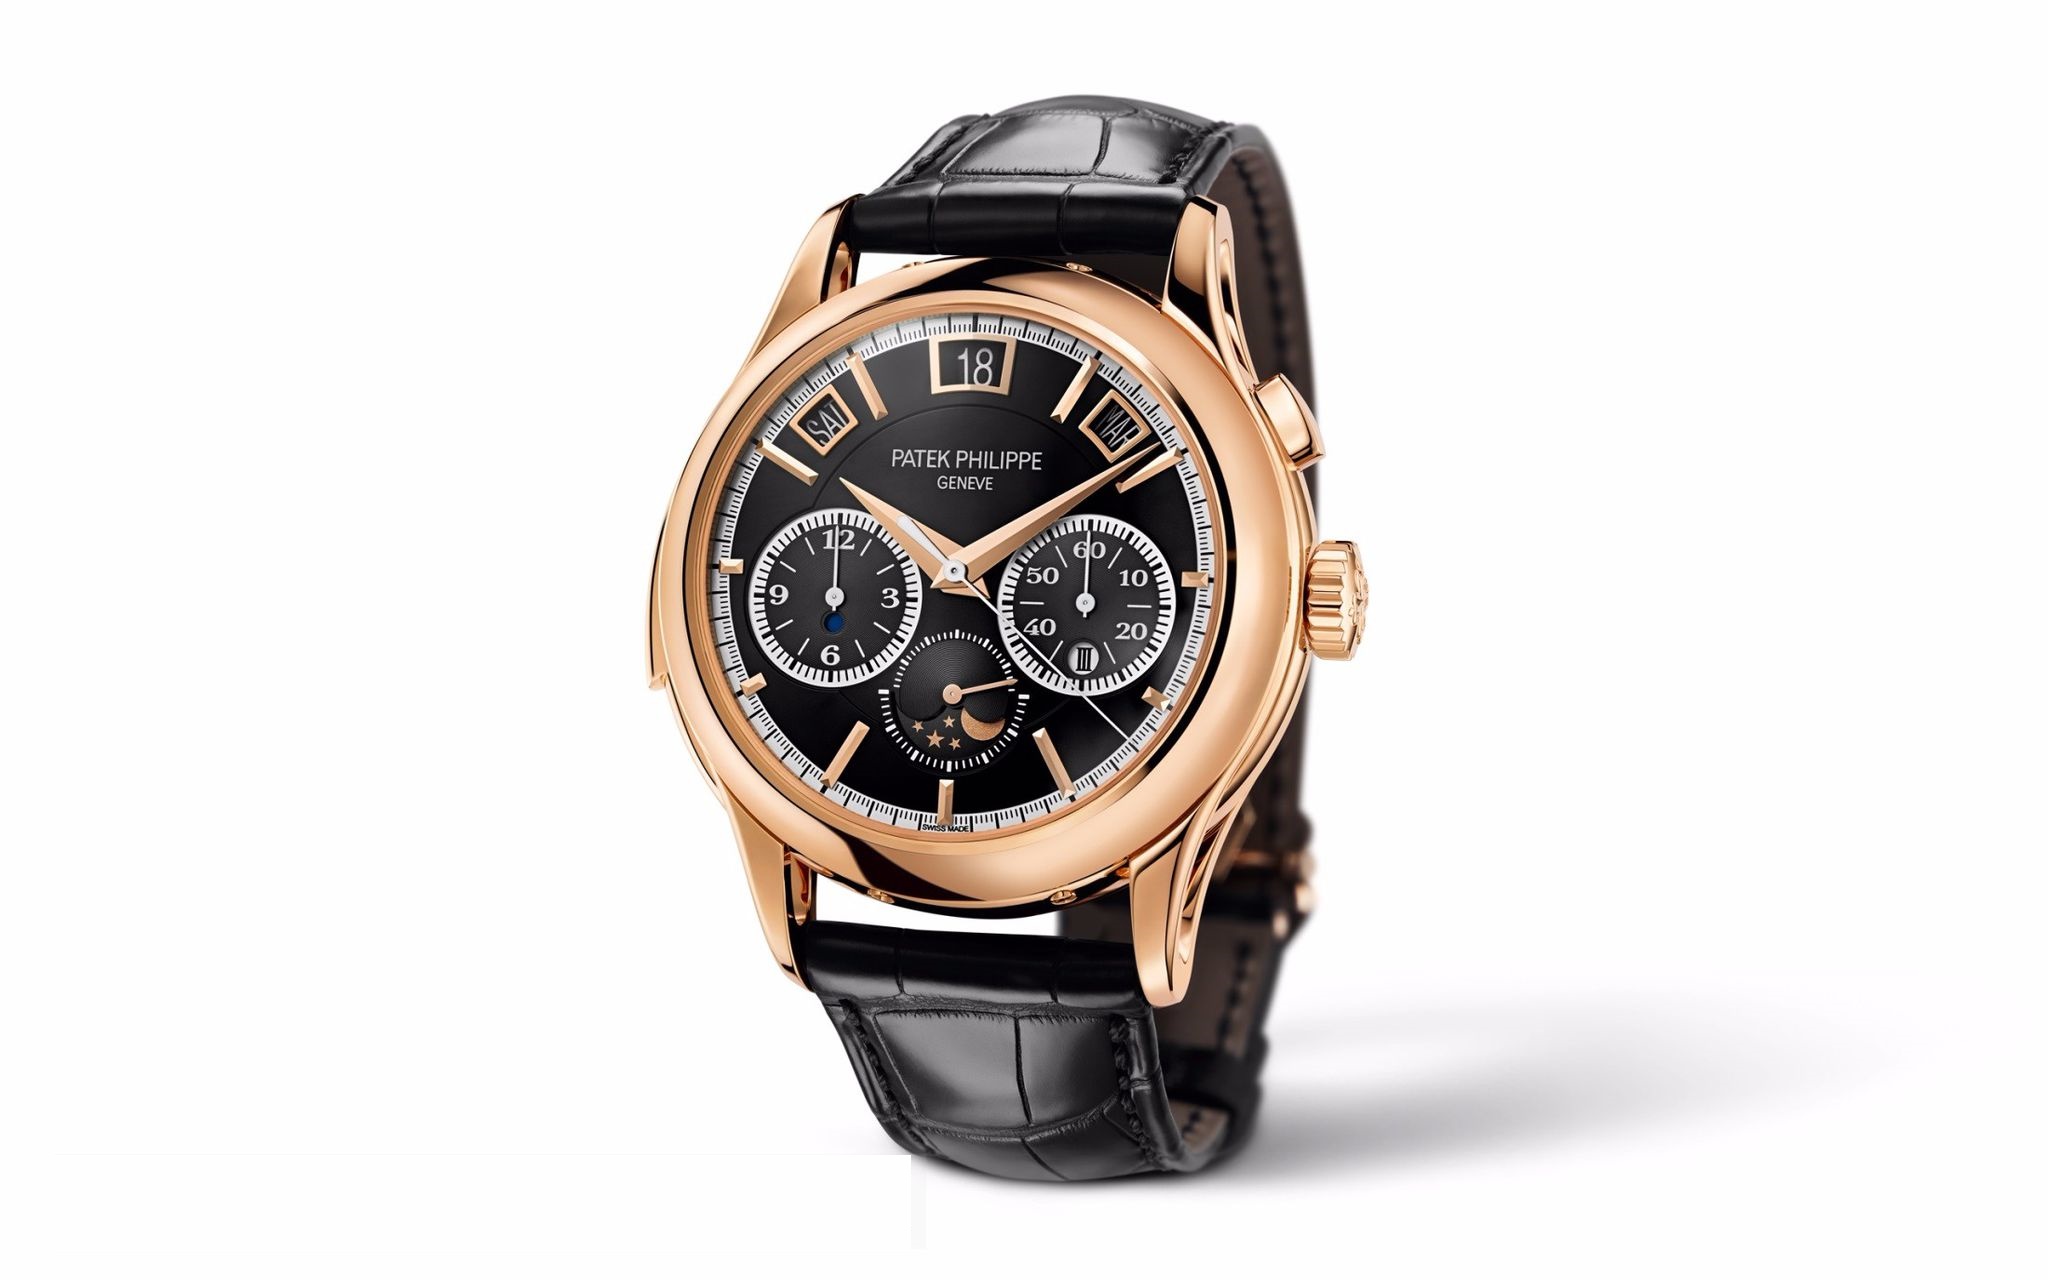 Giới thiệu đồng hồ Patek Philippe Grand Complications 5208R-001